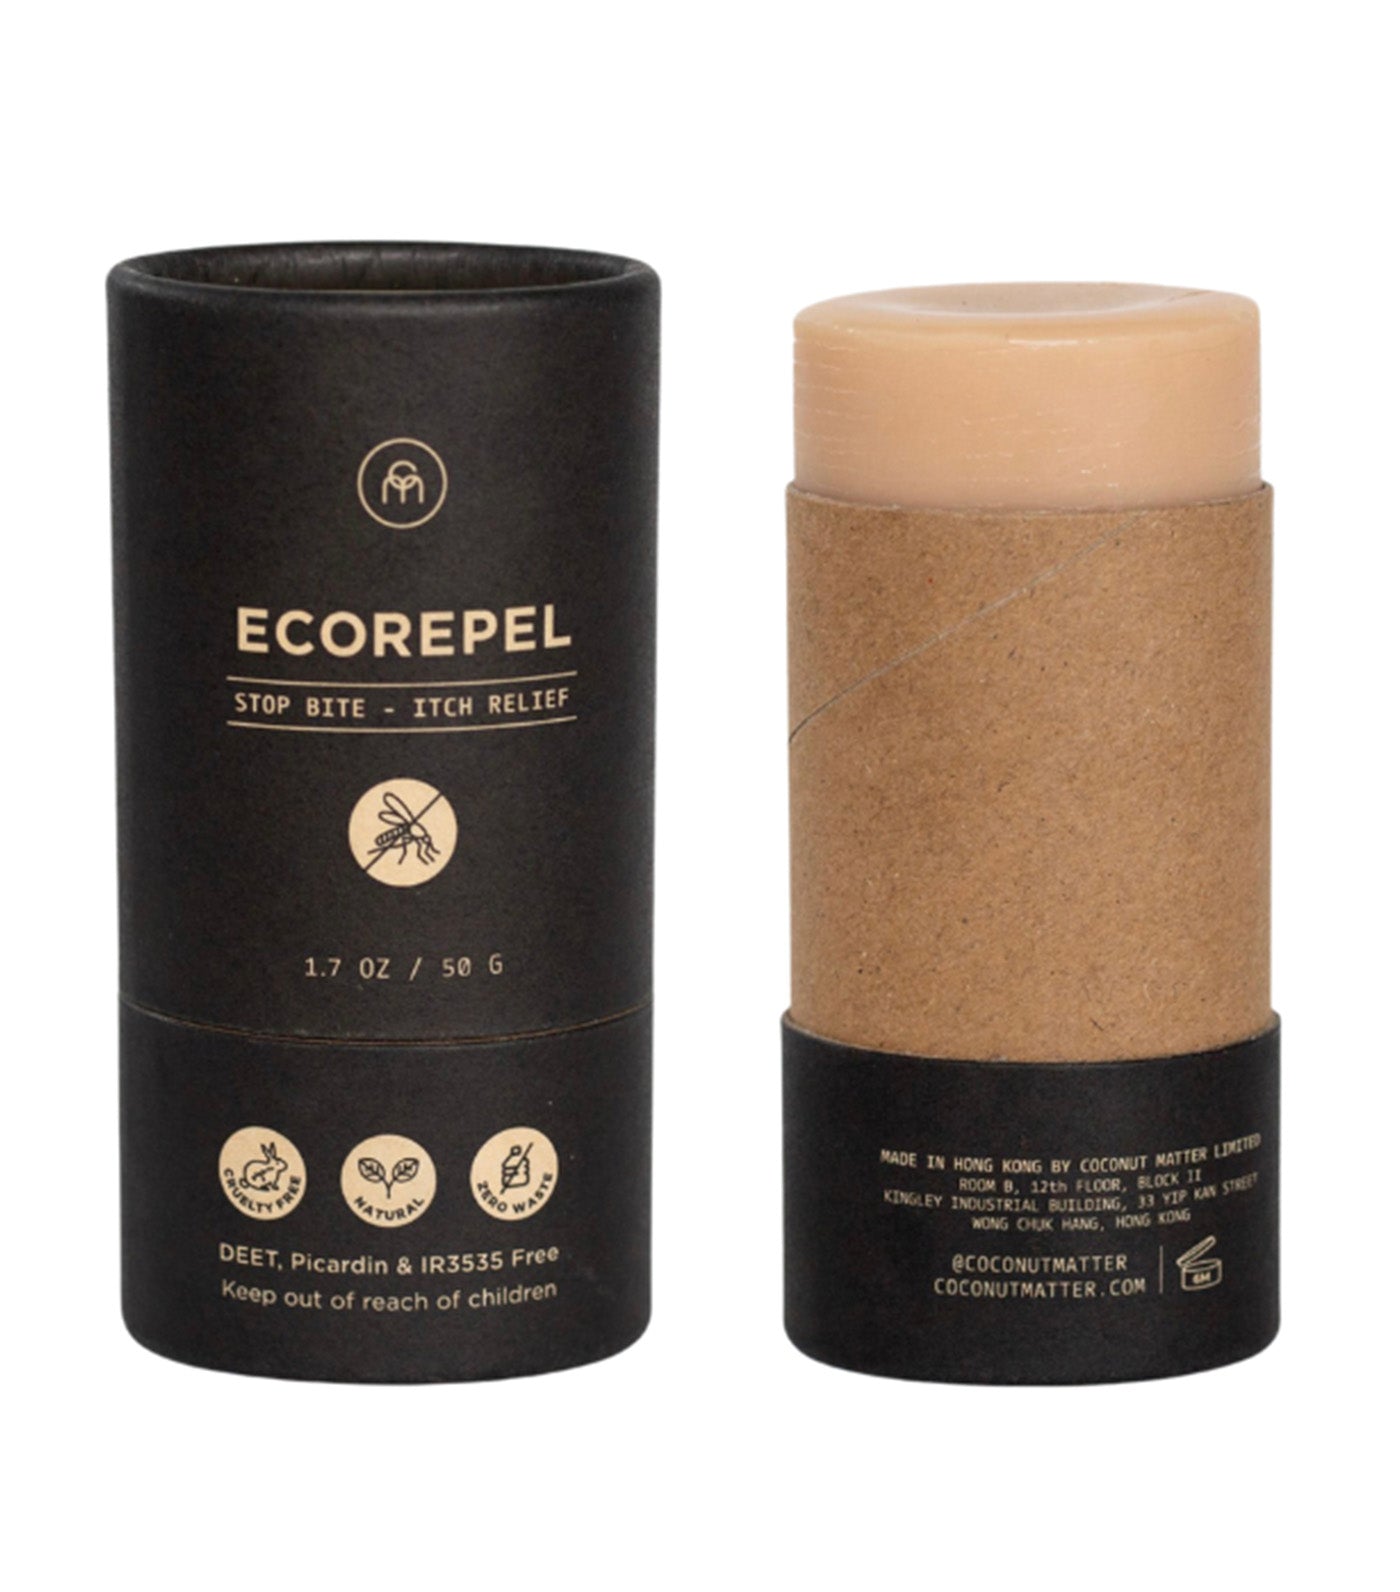 Ecorepel Deet-Free Insect Repellent